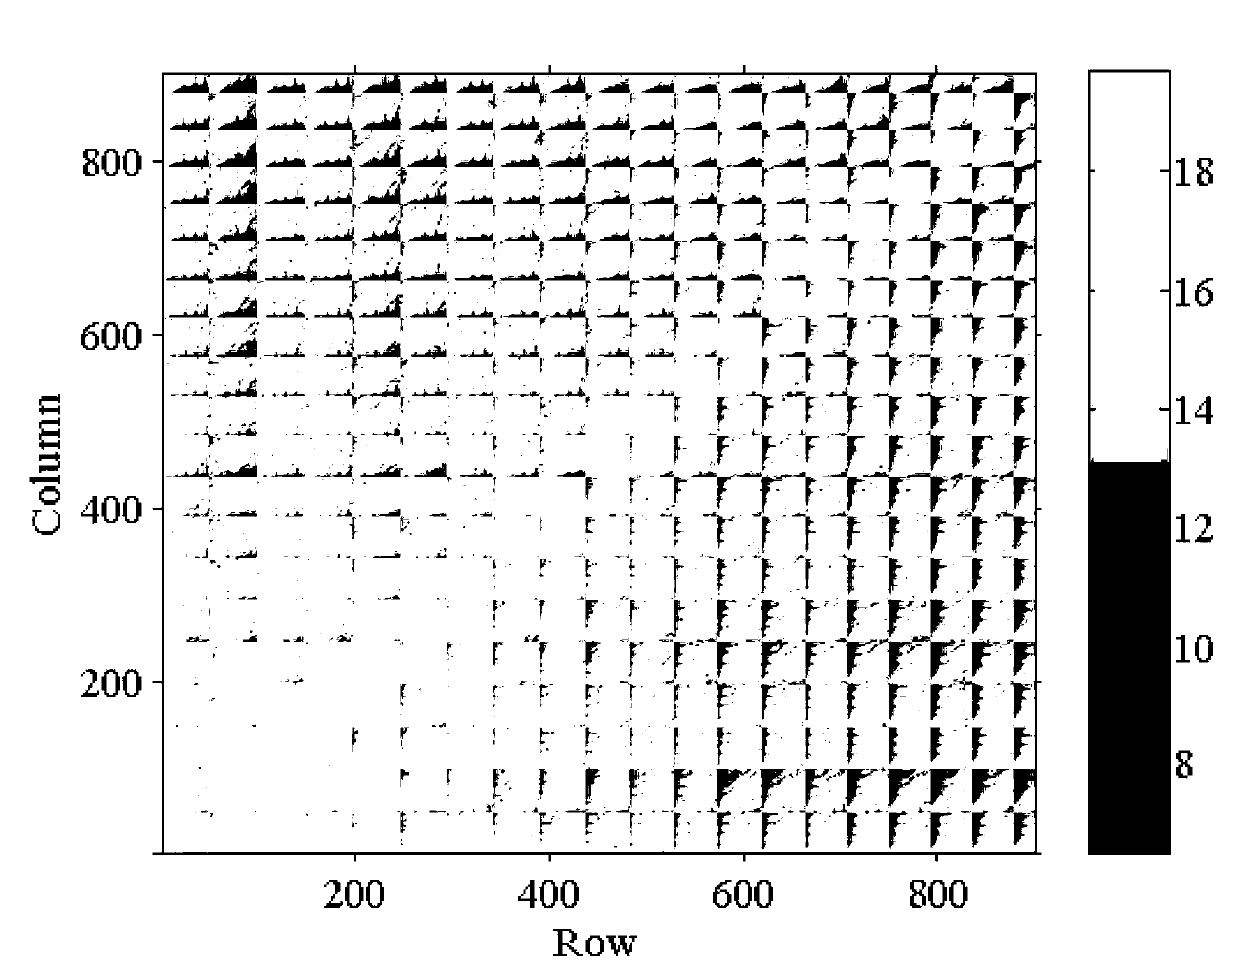 Satellite gravity gradient retrieval method based on filtering principle